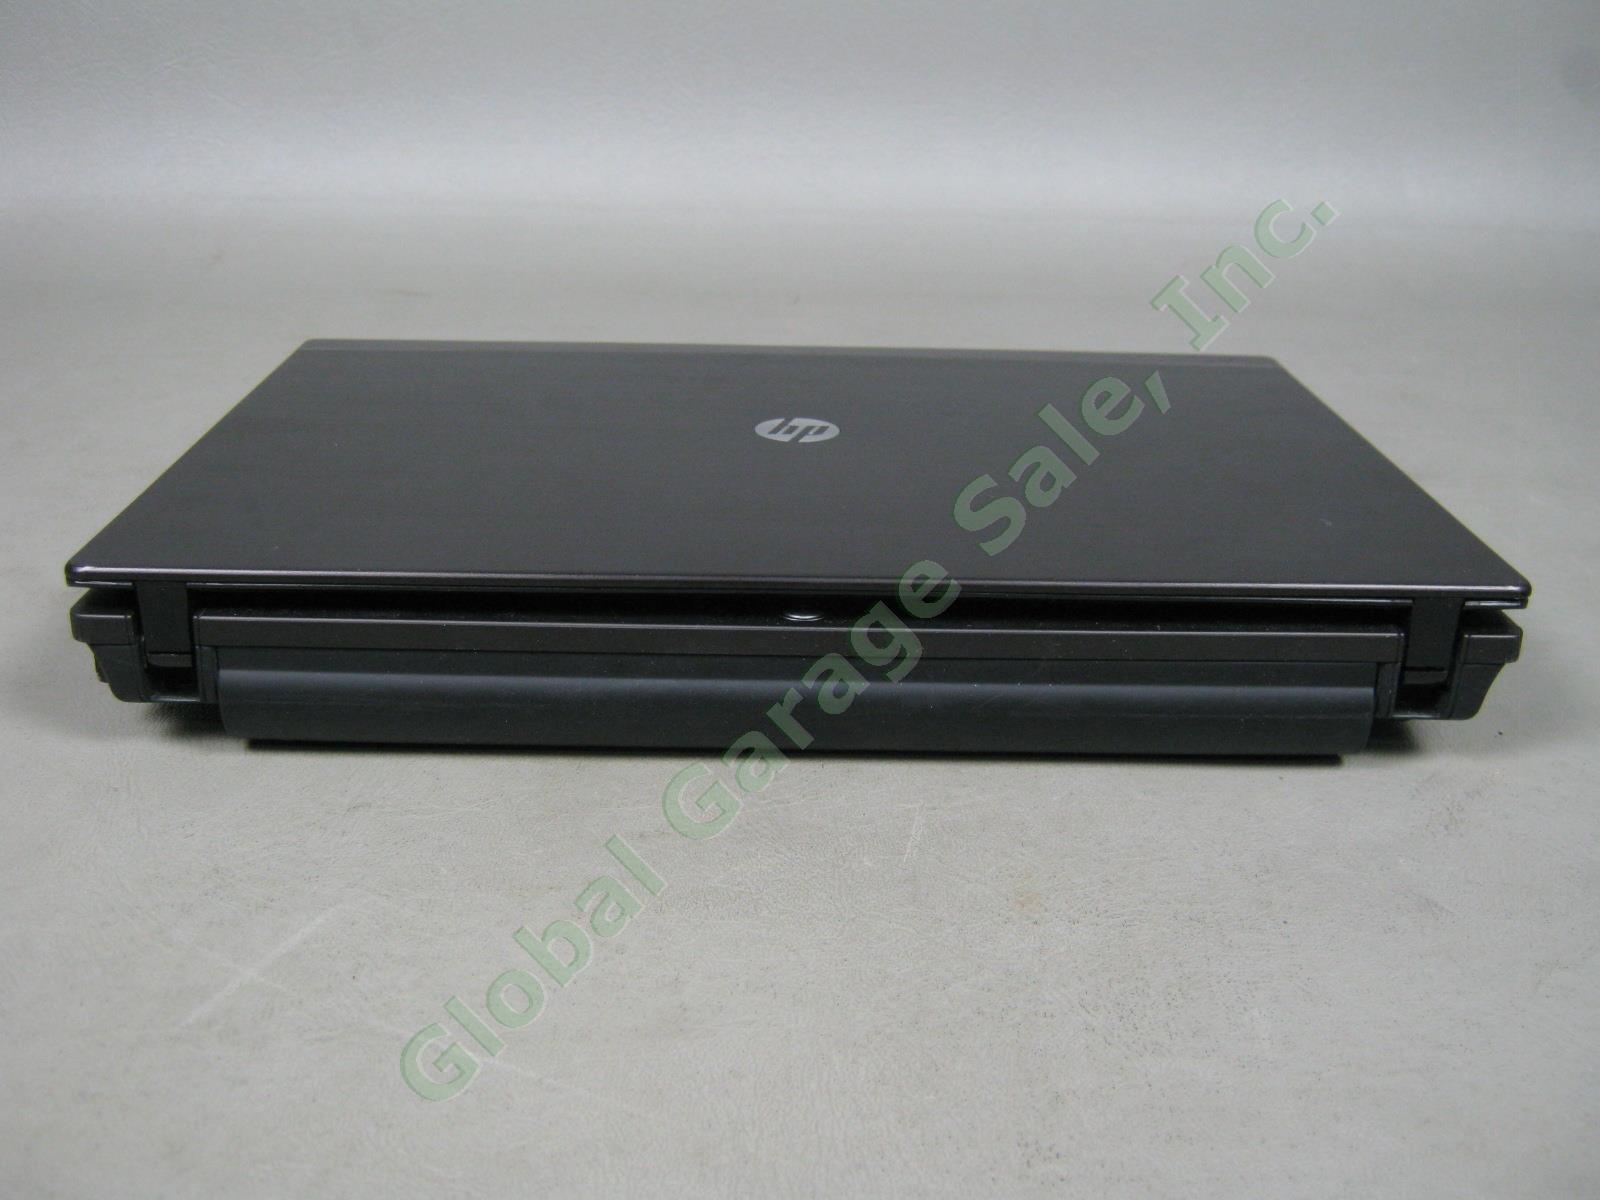 HP Mini 5103 10.1" Netbook Laptop Intel Atom 1.83GHz 2GB RAM 160GB HDD Windows 7 5